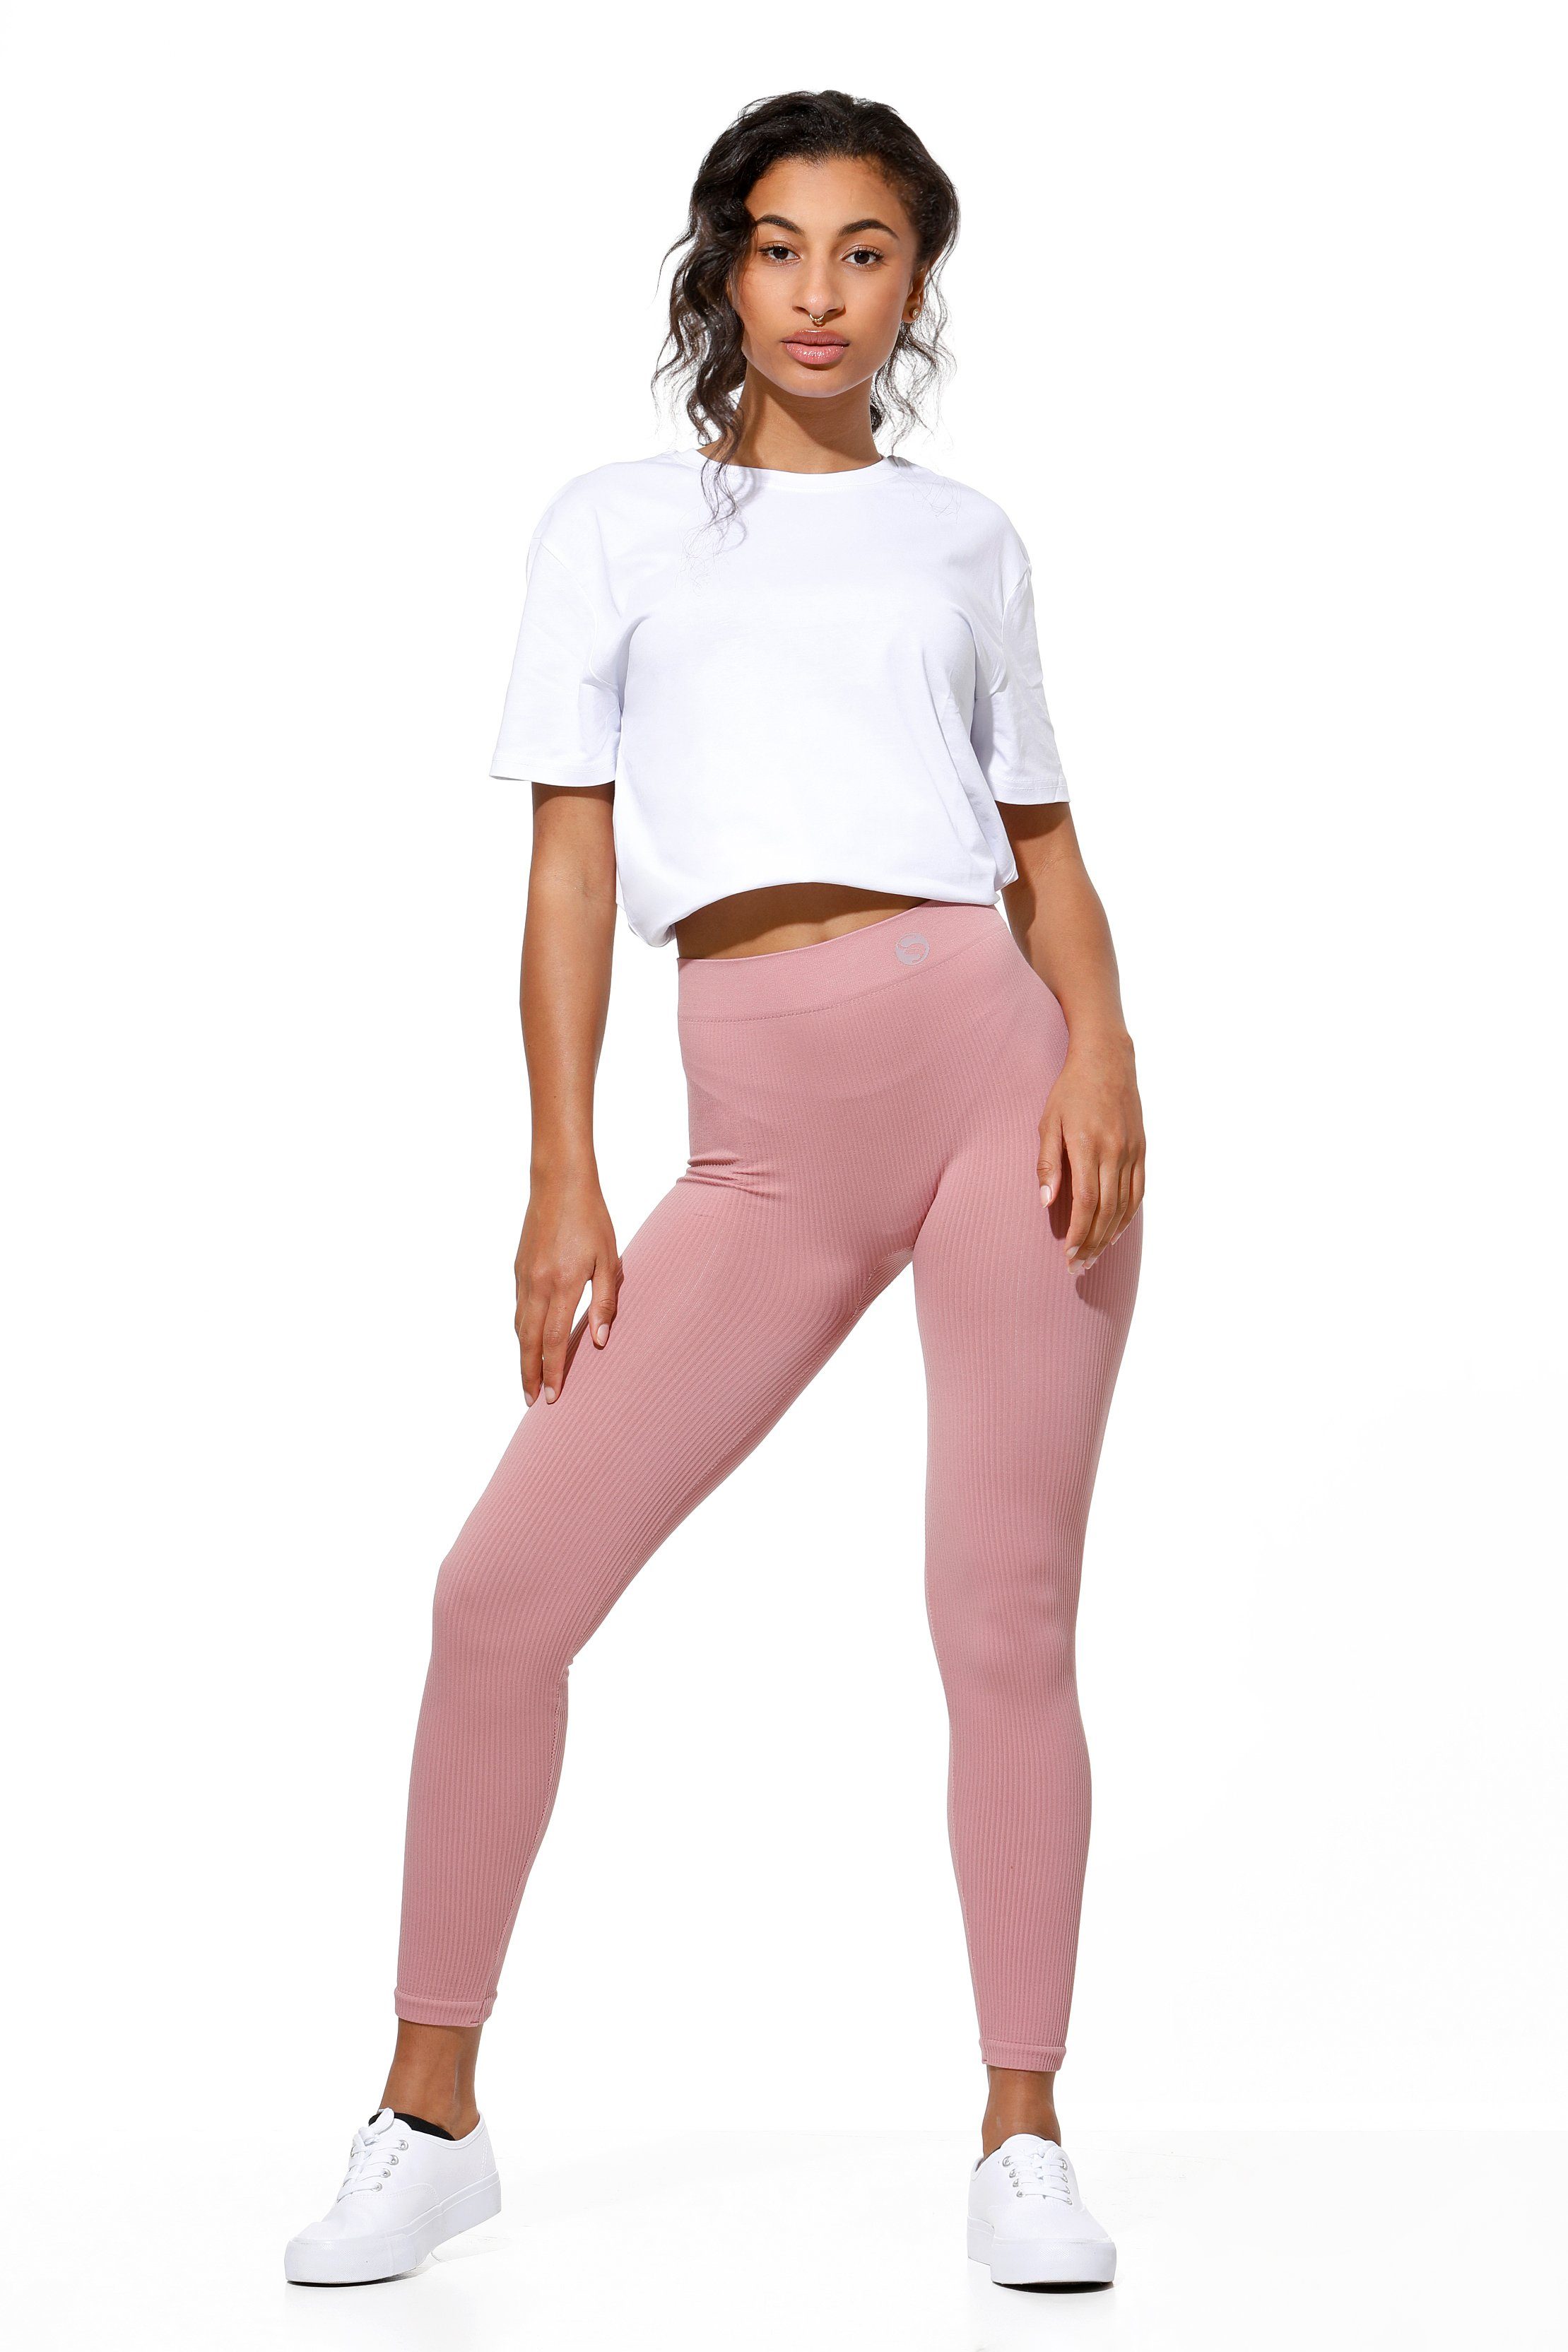 Damen, mit Leggings Bund Ribbed für Soul® Altrosa Fitness-Leggings, Jogginghose Leggings elastischem Stark und Zwickelnaht